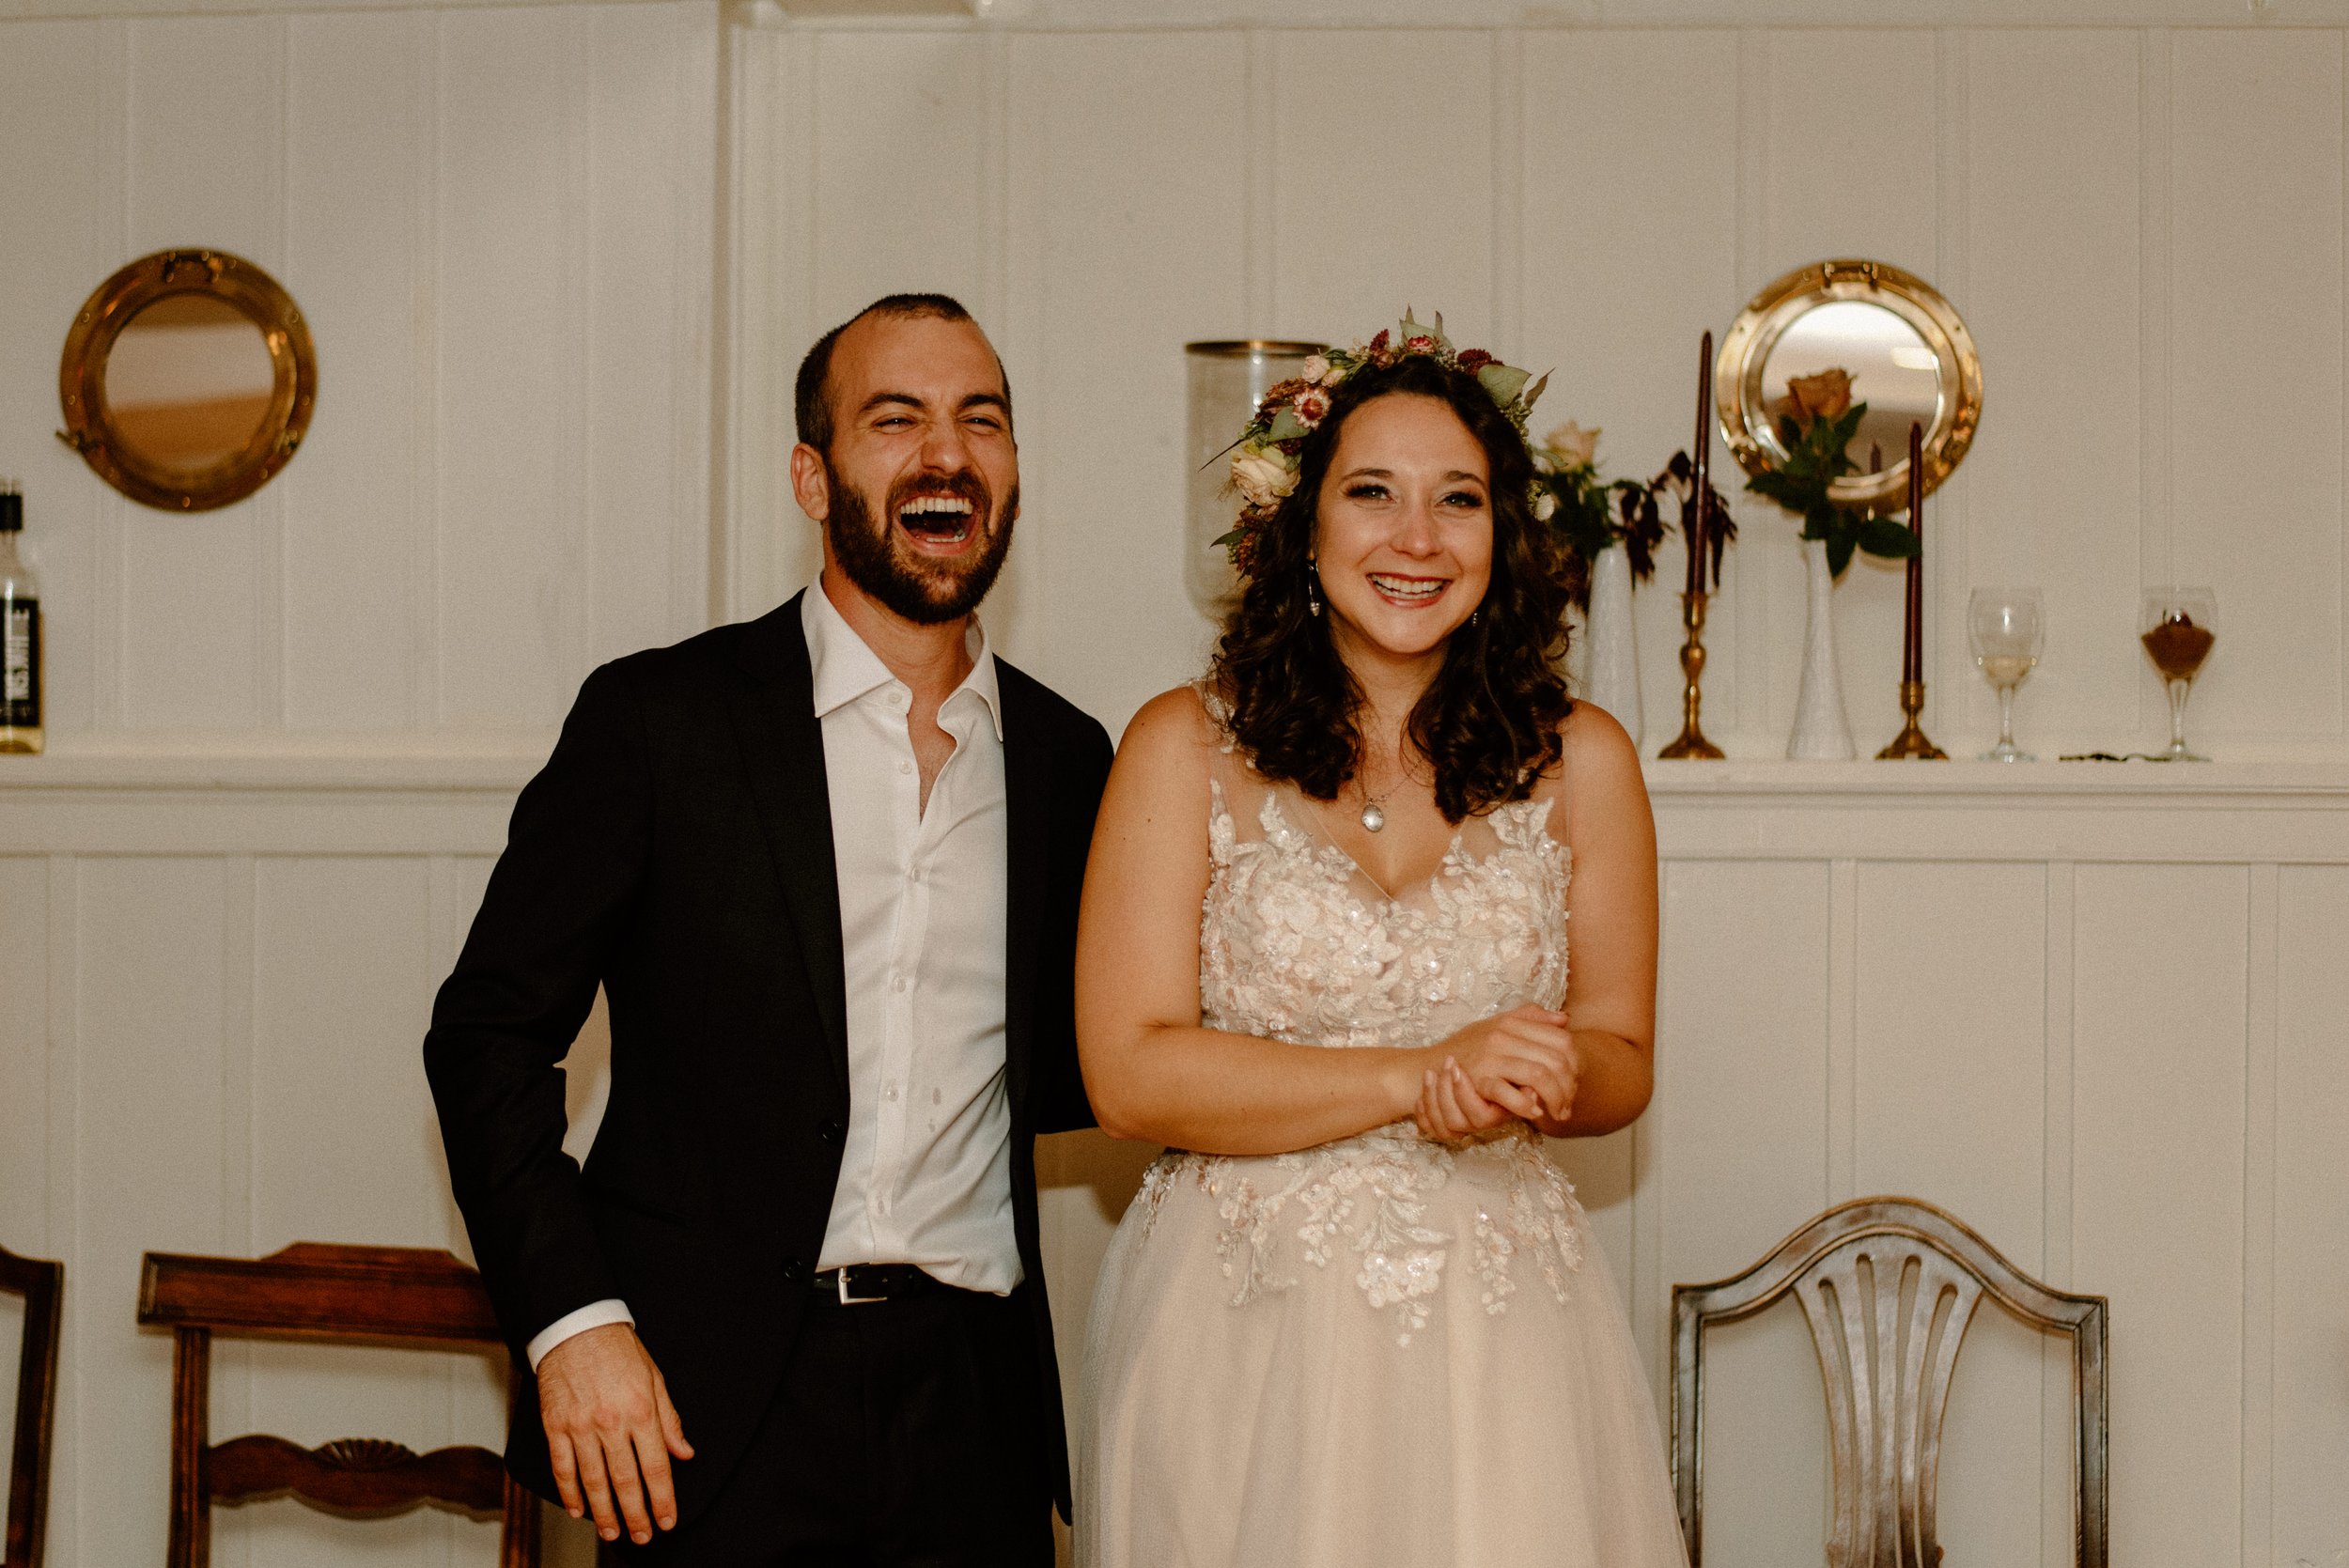 Nova Scotia Lunenburg wedding photographer - Michaela Bell Photography